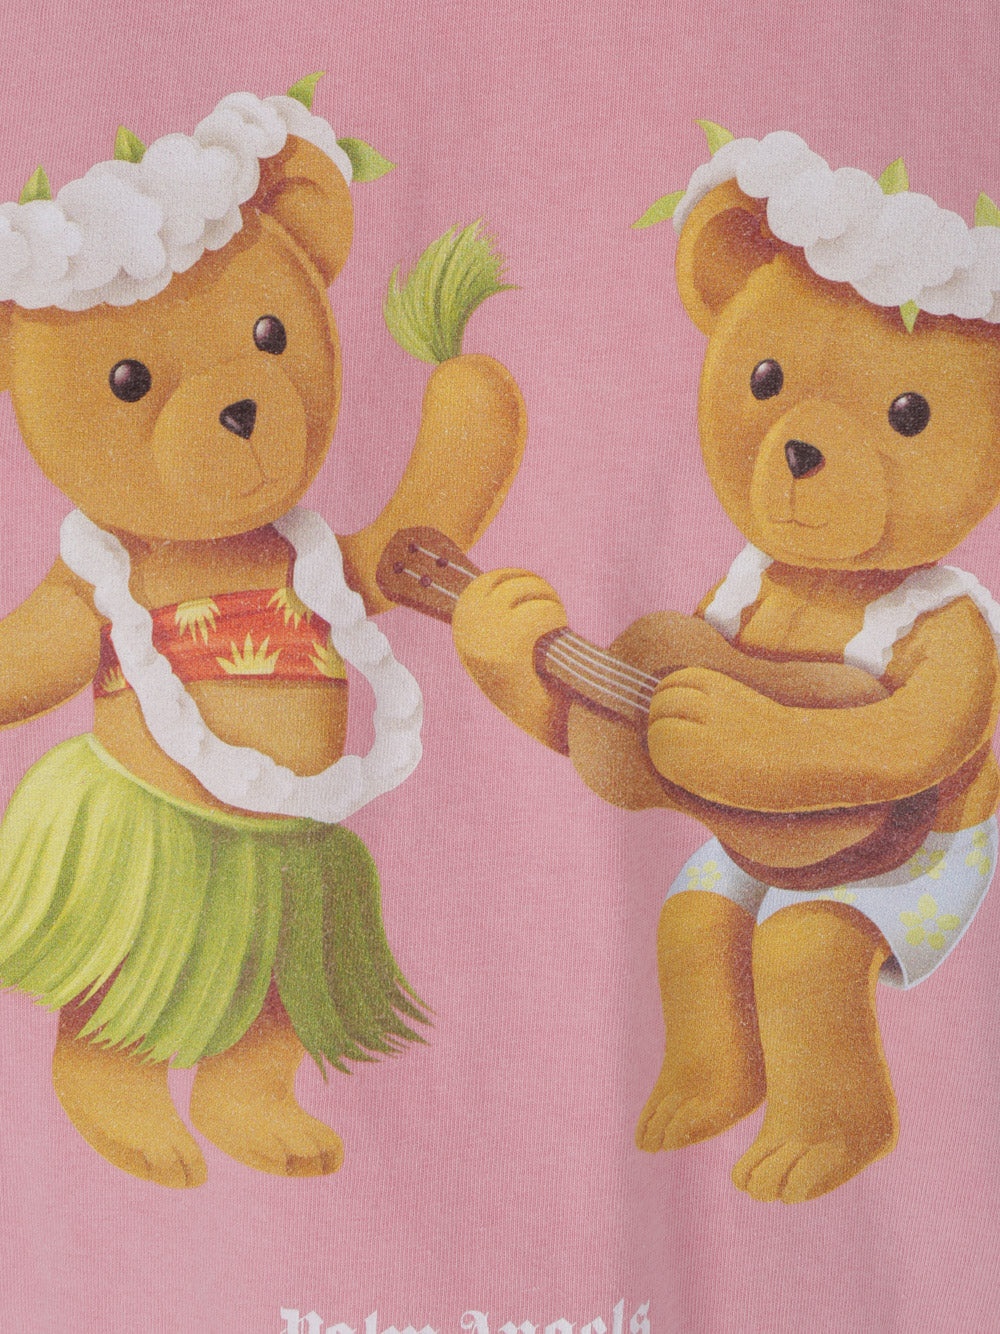 Dancing Bears Cropped T-Shirt - Pink